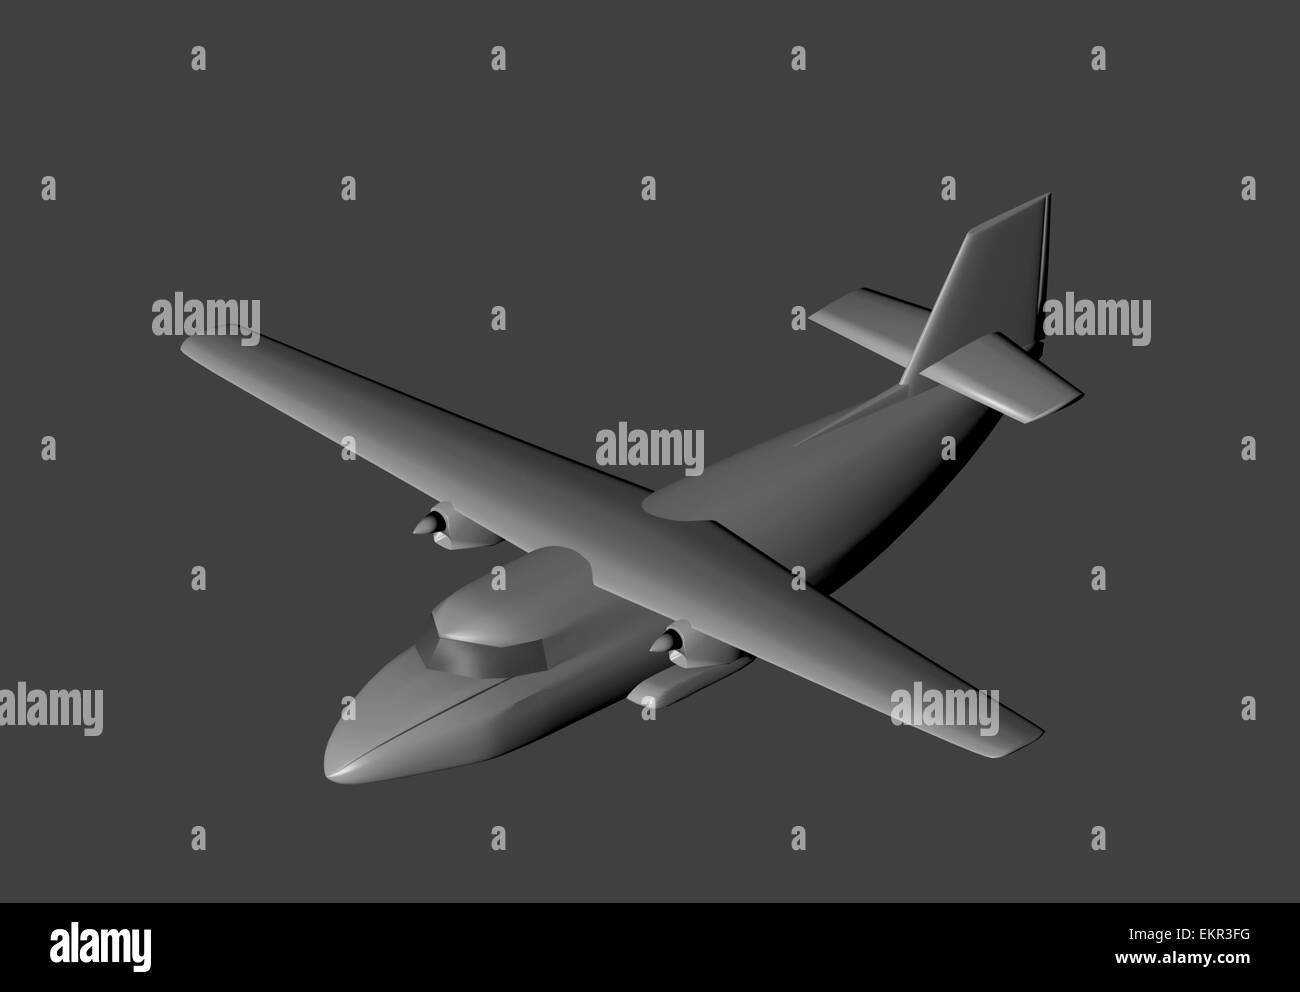 airplane, 3d, model, plane, aircraft, aeroplane, isolated, aviation, air, flight, transportation, black, technology, background, Stock Photo